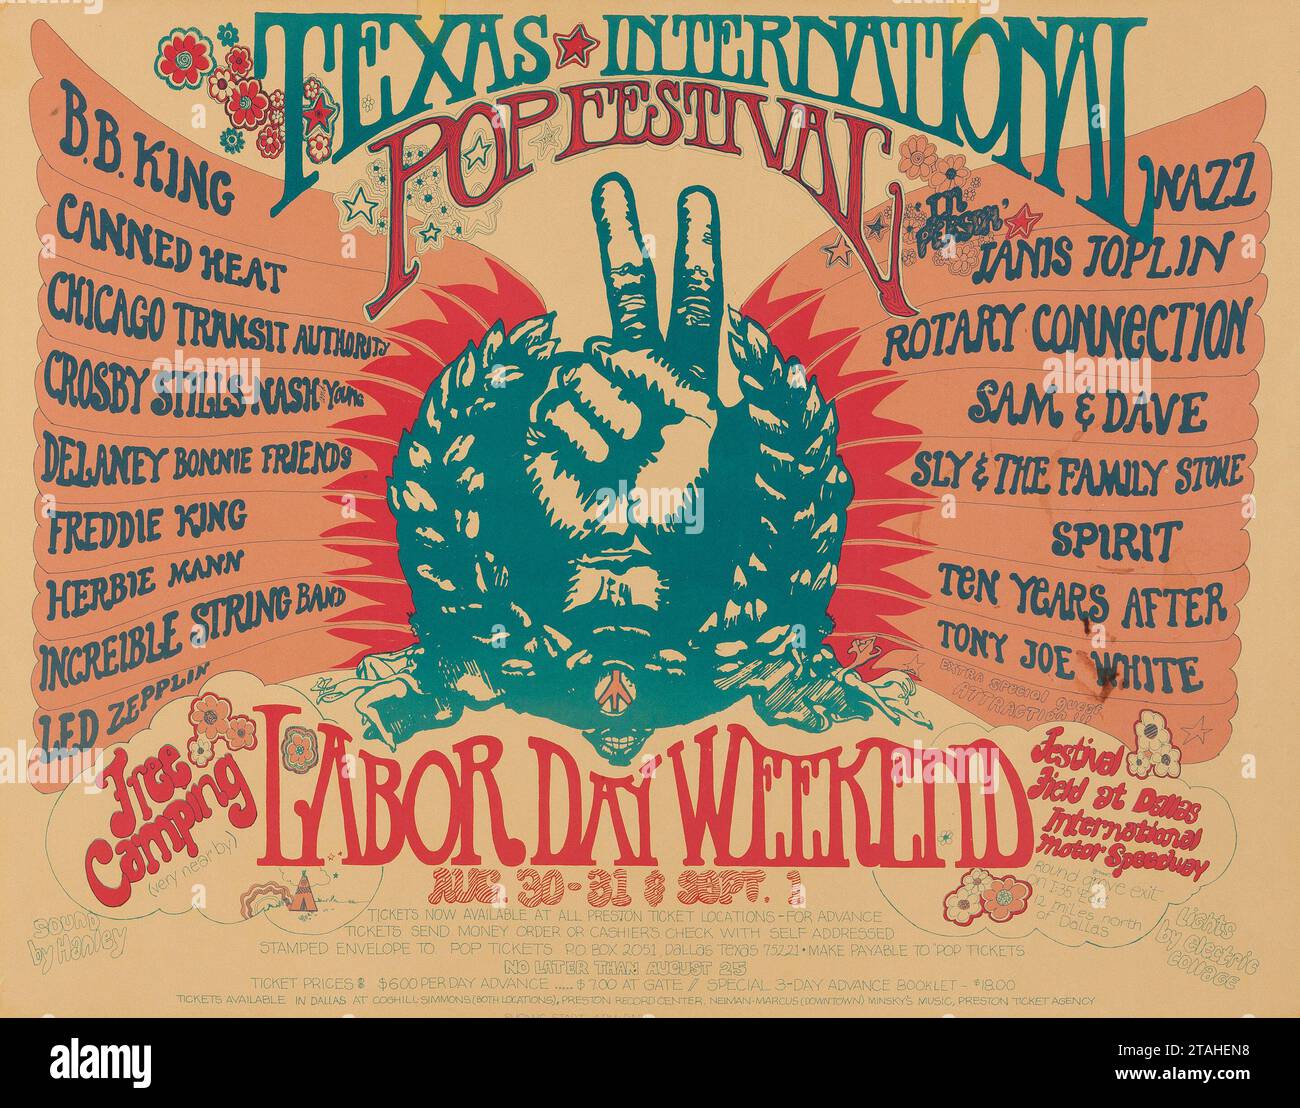 Texas International Pop Festival Concert Poster (1969) BB King, Canned Heat, Led Zeppelin, Janis Joplin, Ten Years After, Crosby Stills Nash Stock Photo